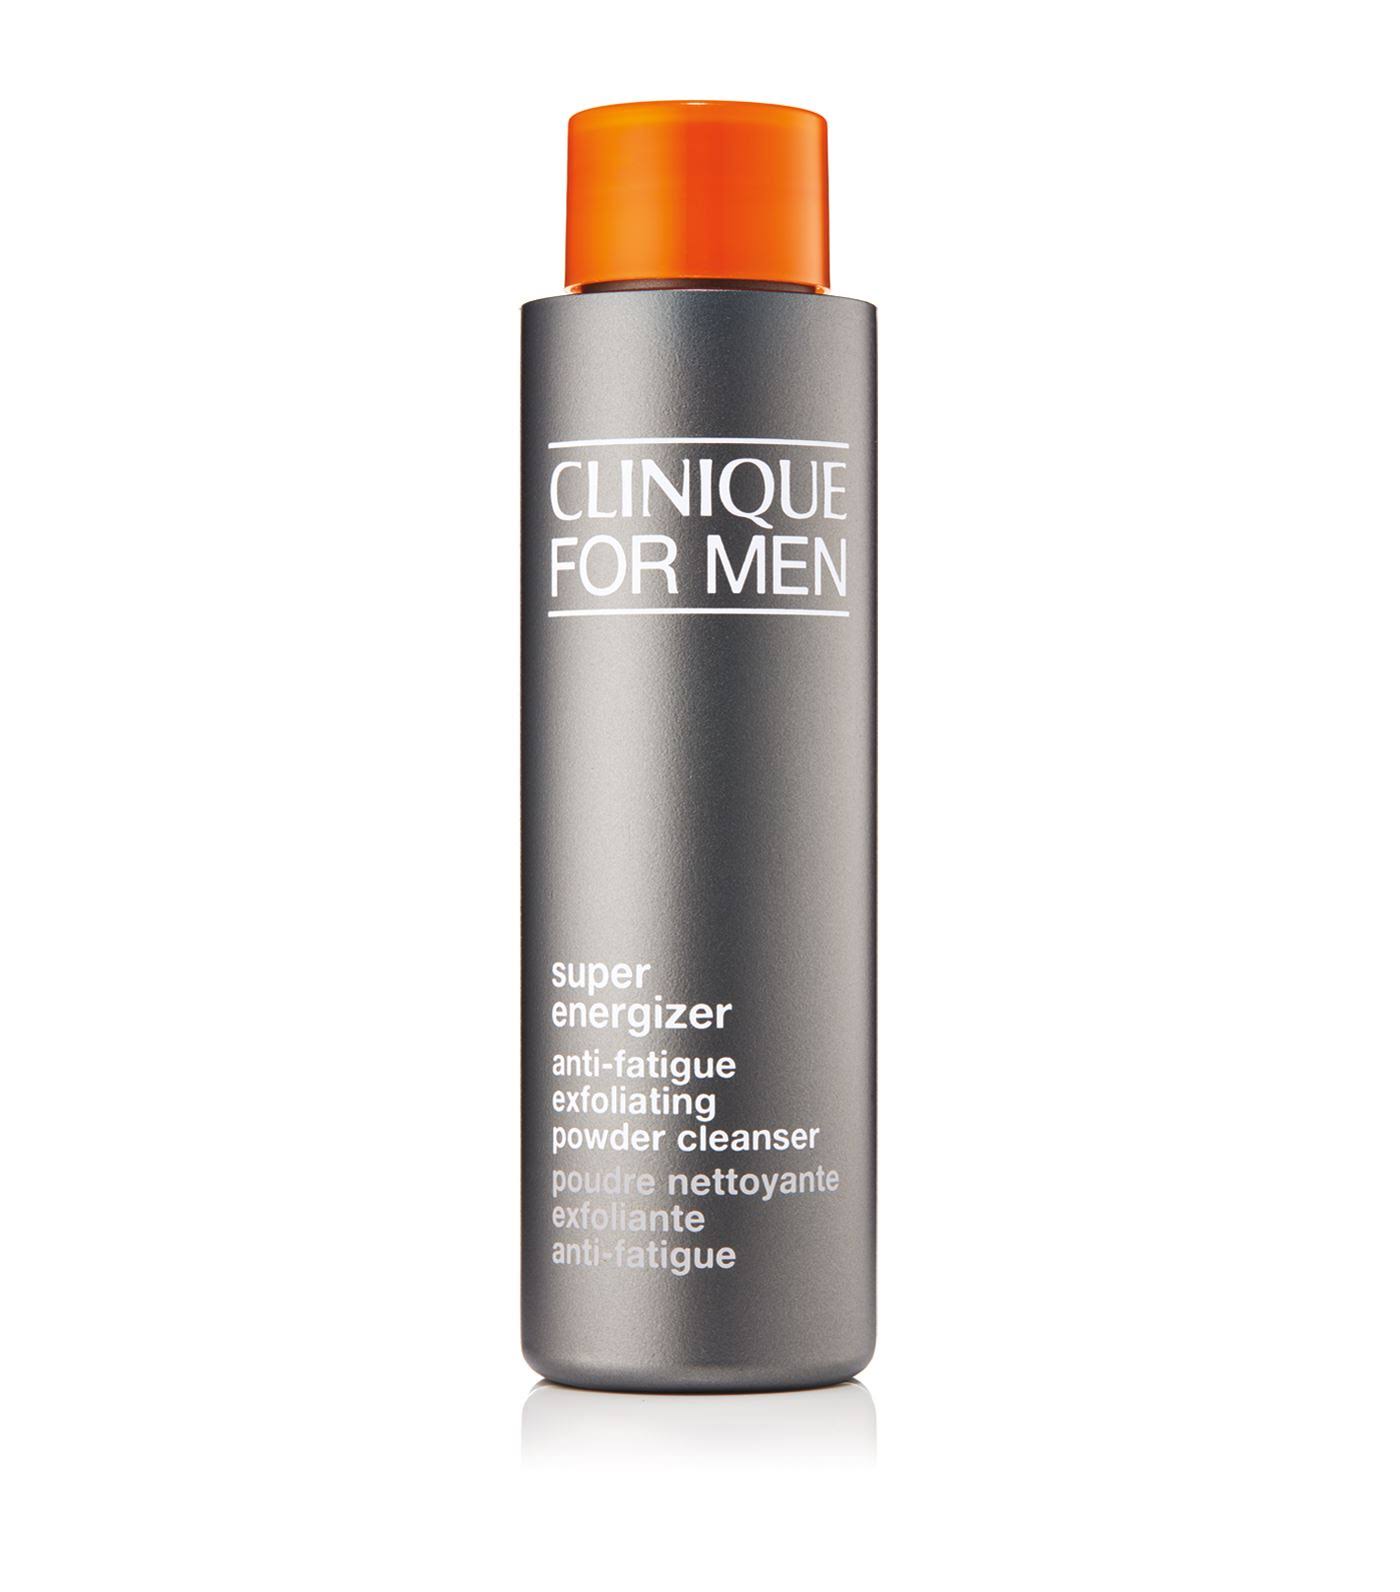 Clinique for Men Super Energizer Anti-Fatigue Exfoliating Powder Cleanser - 1.76oz